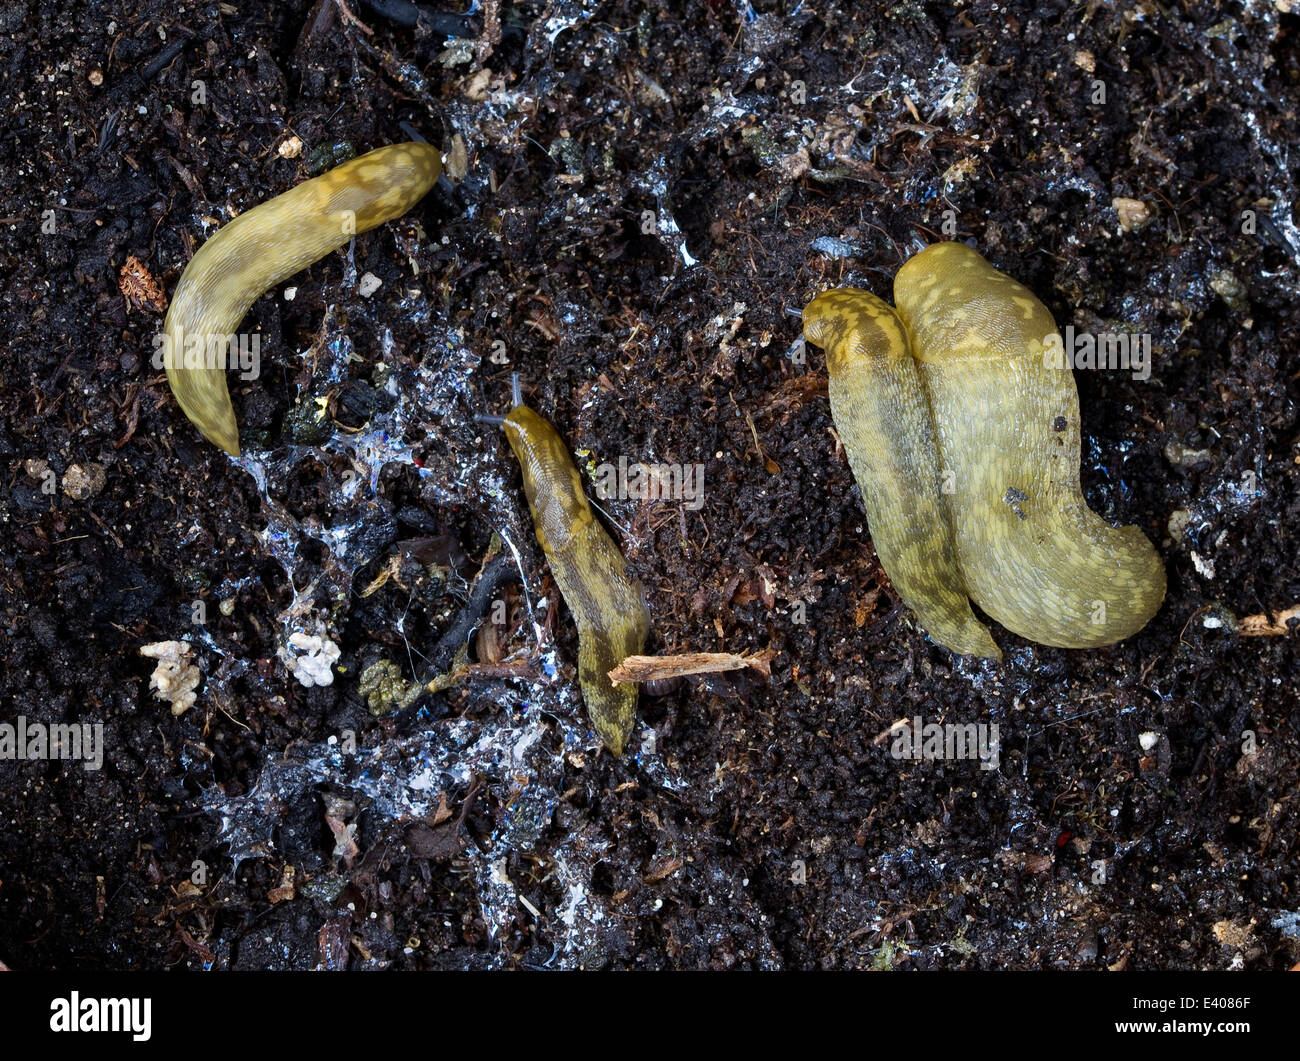 Common Yellow Slugs in garden plant pot. Stock Photo